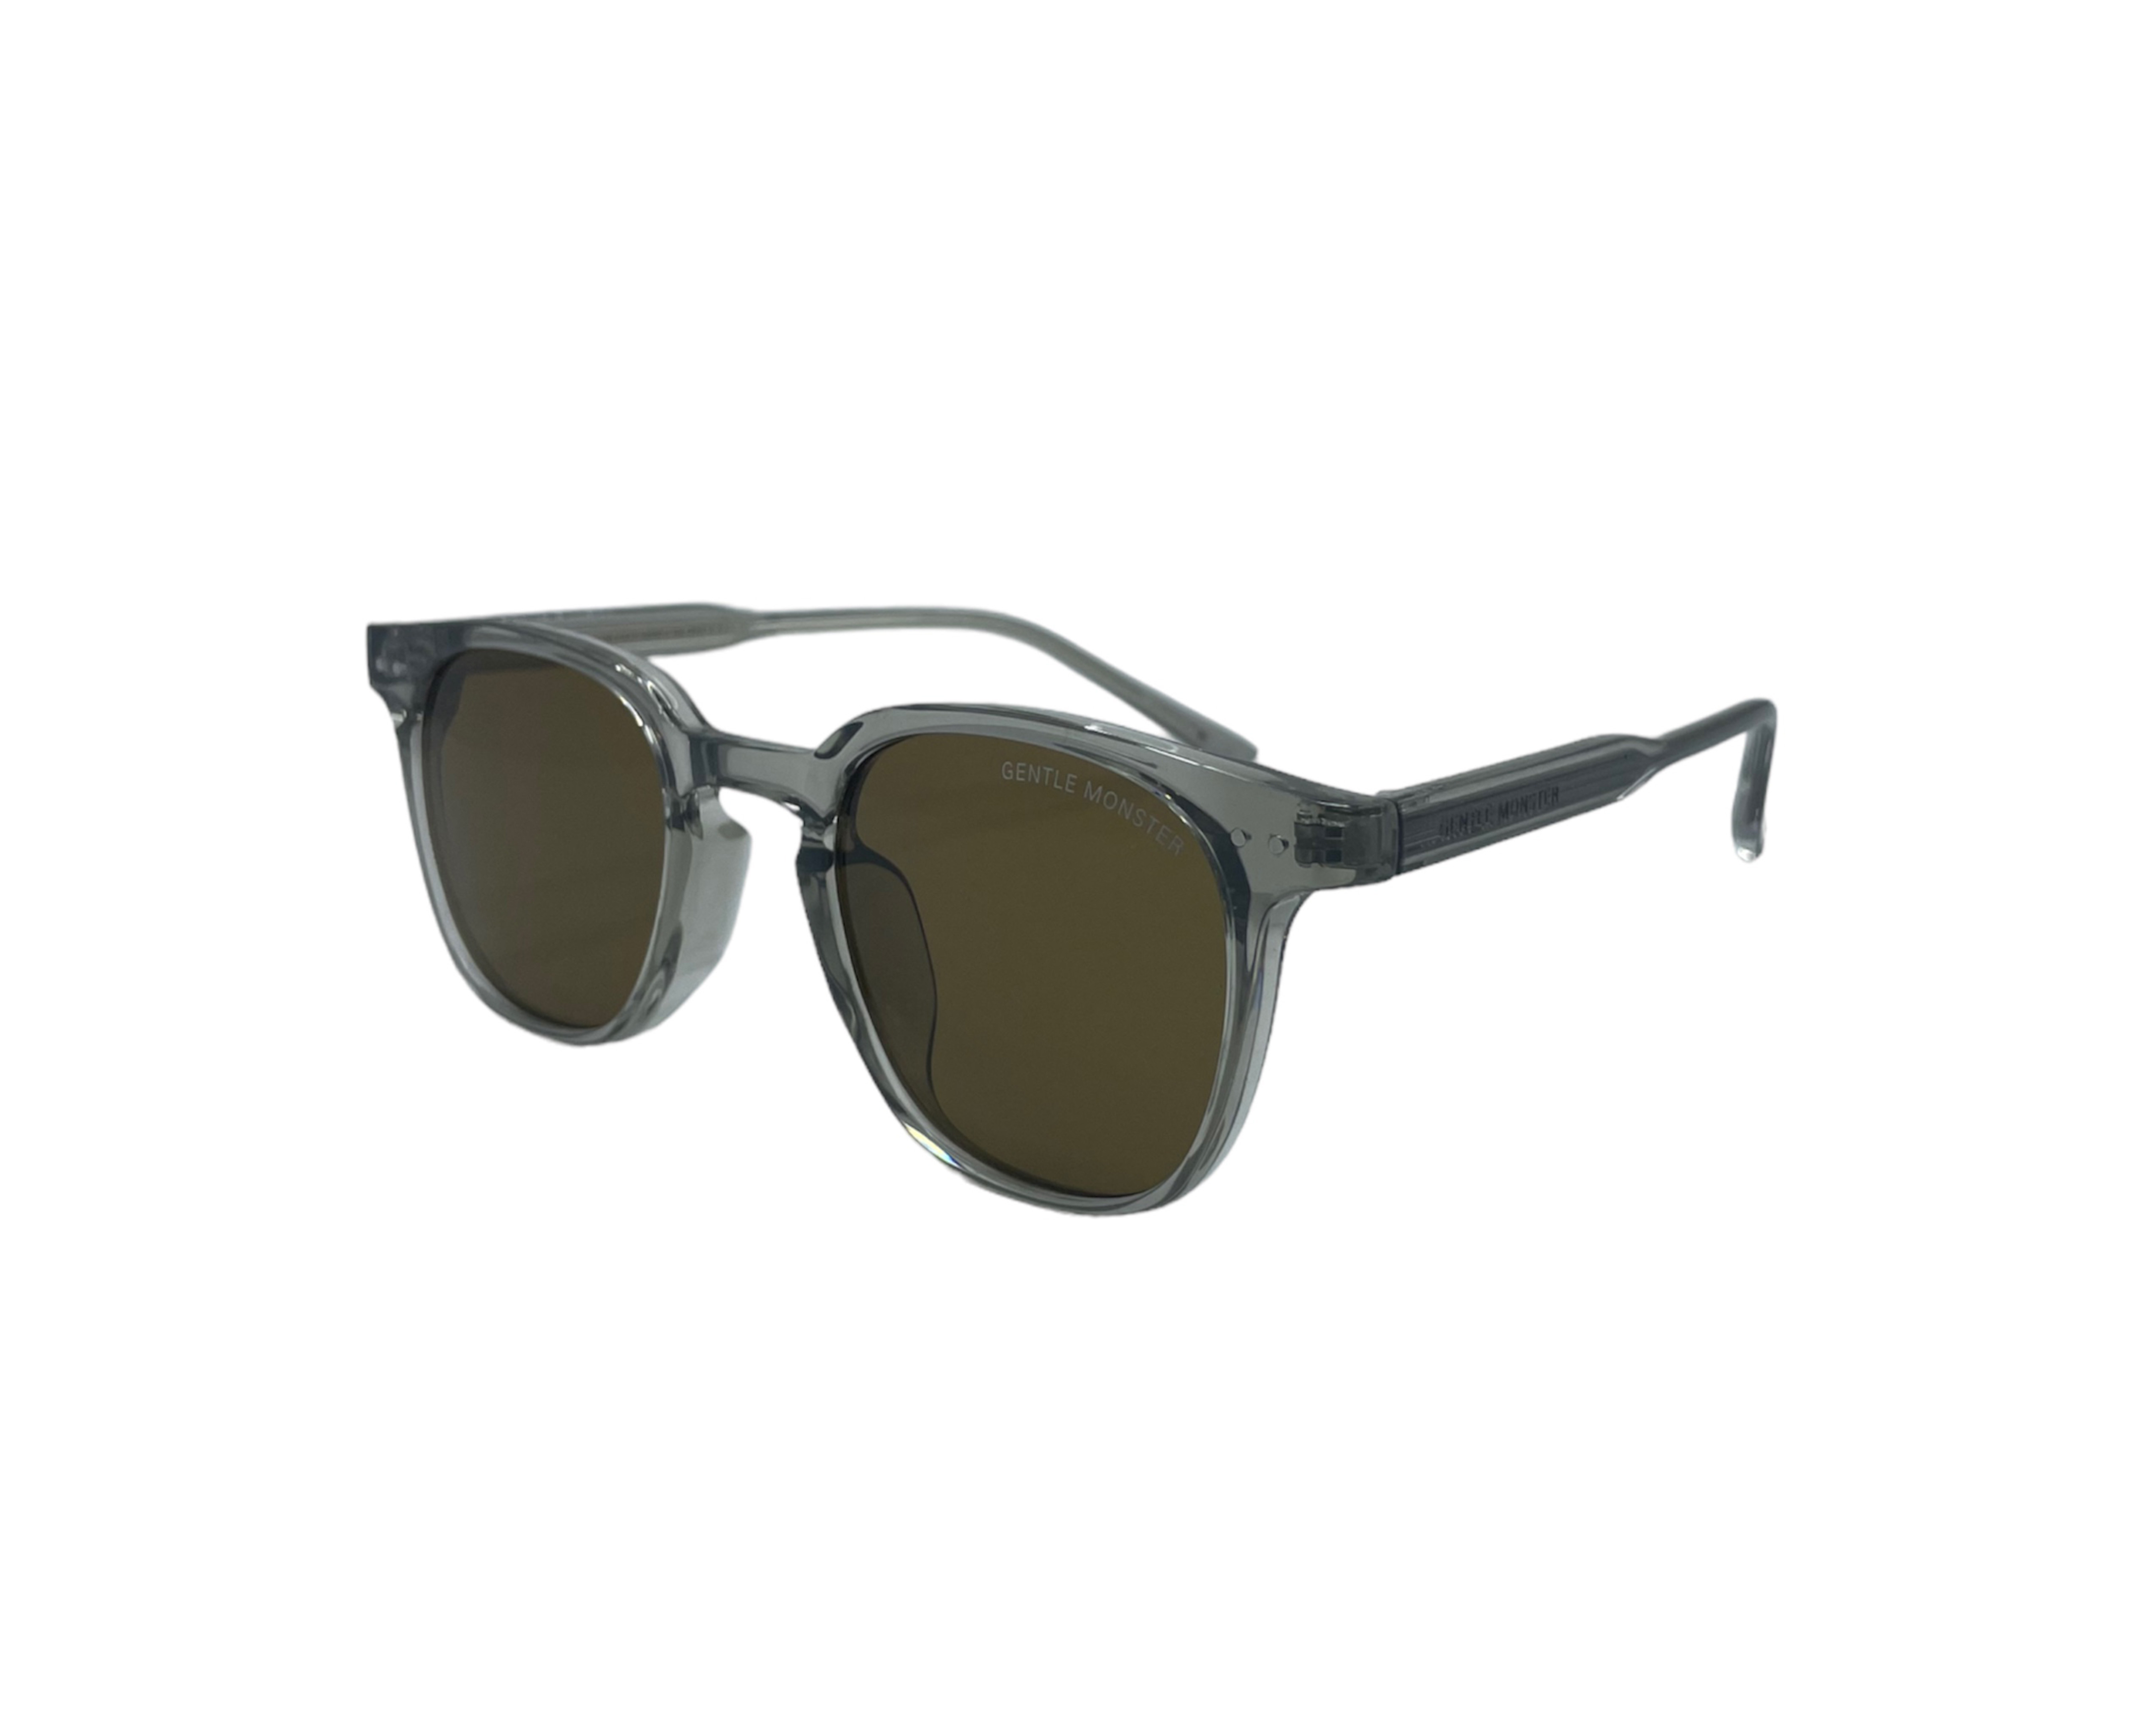 NS Deluxe - 6265 - Black - Sunglasses